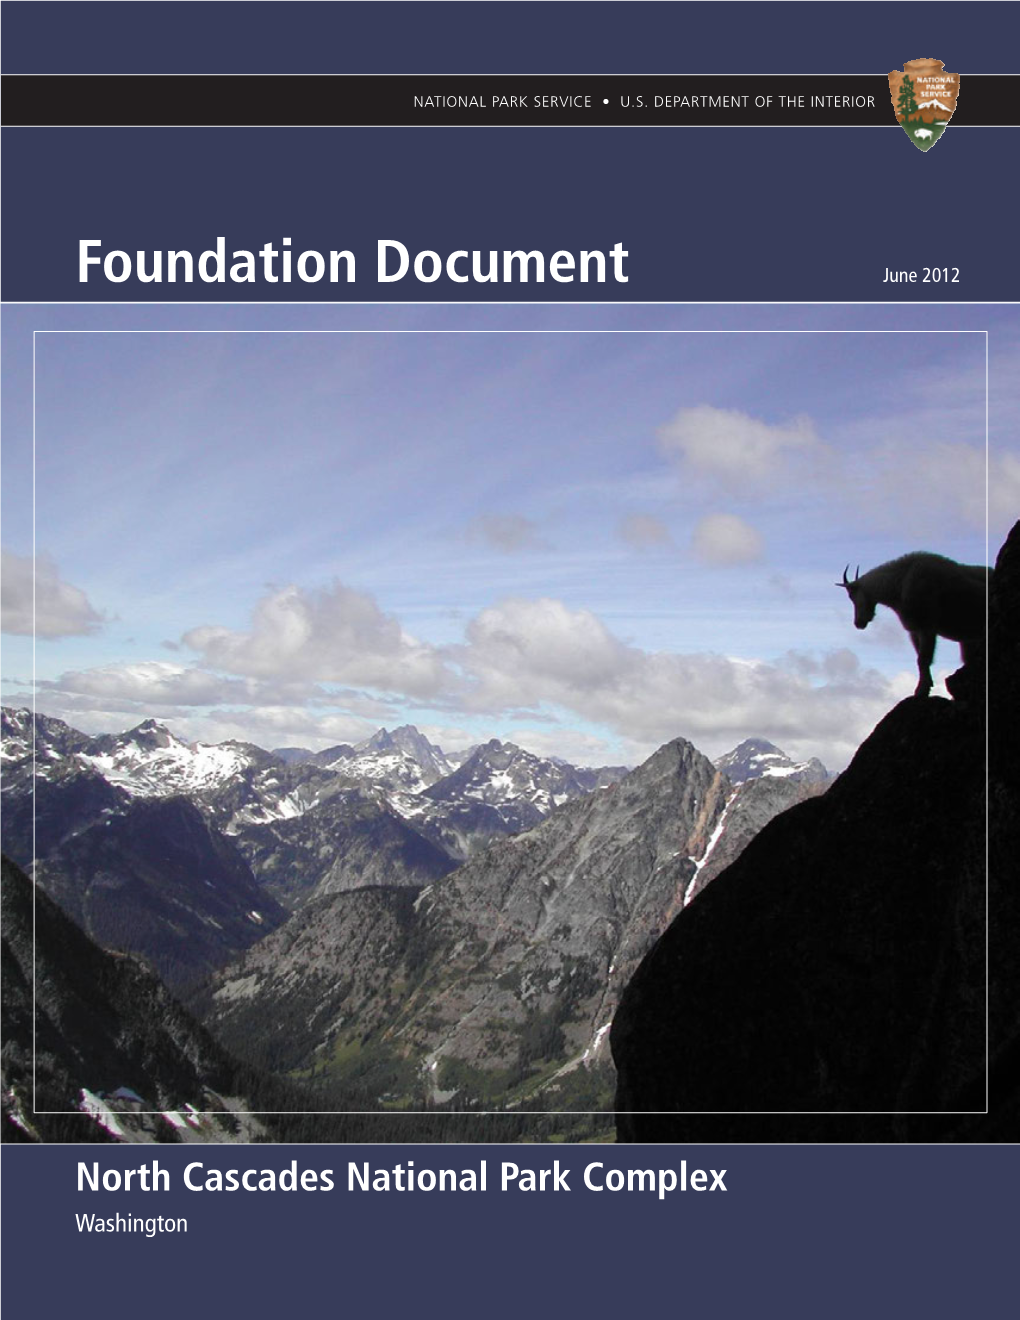 Foundation Document • North Cascades National Park Complex